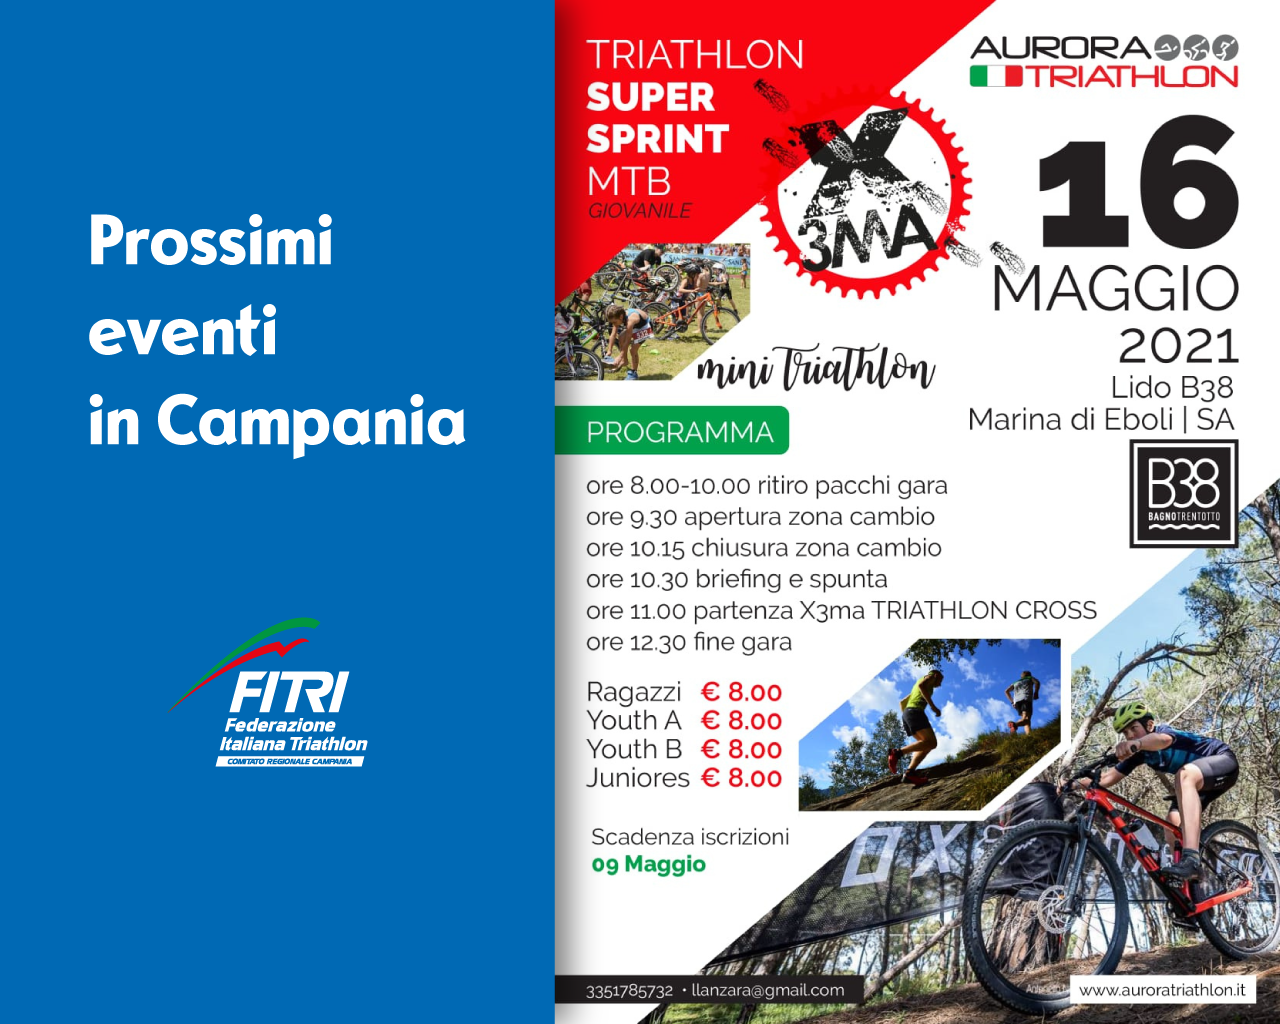 images/campania/medium/cover-eventi---x3ma-FITRI-Campania.png